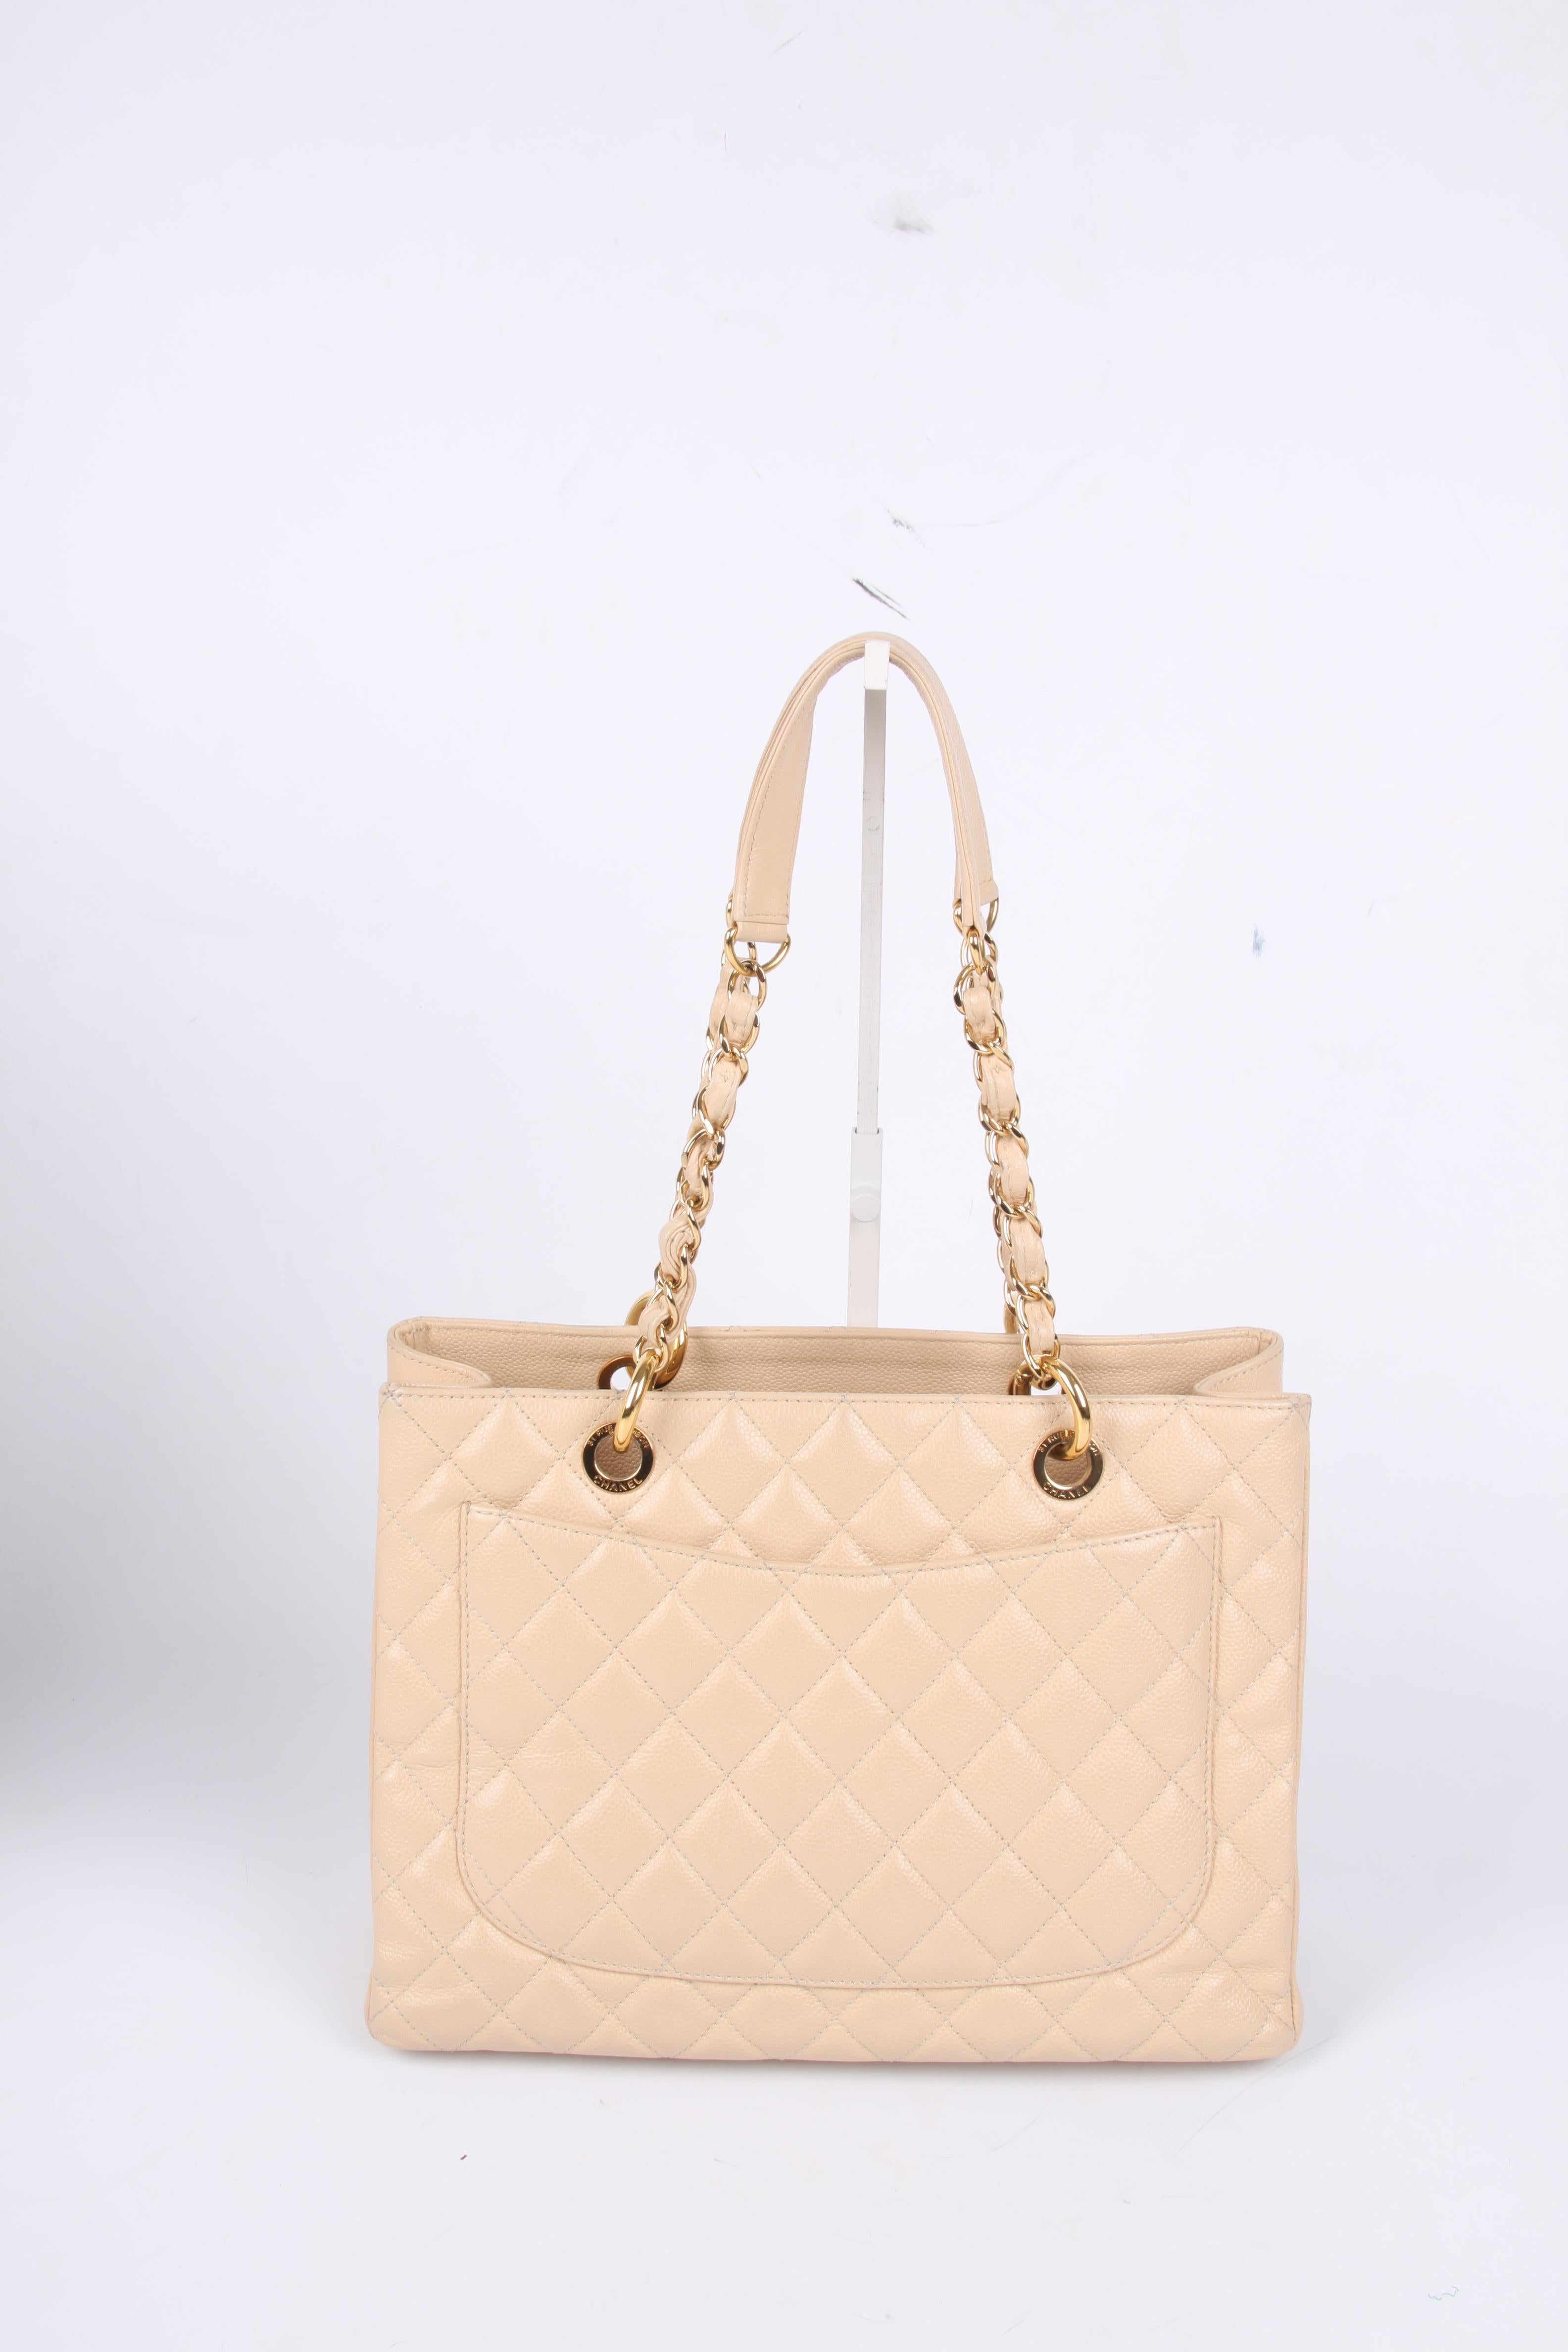 Women's   Chanel Grand Shopper Bag - beige caviar leather    For Sale